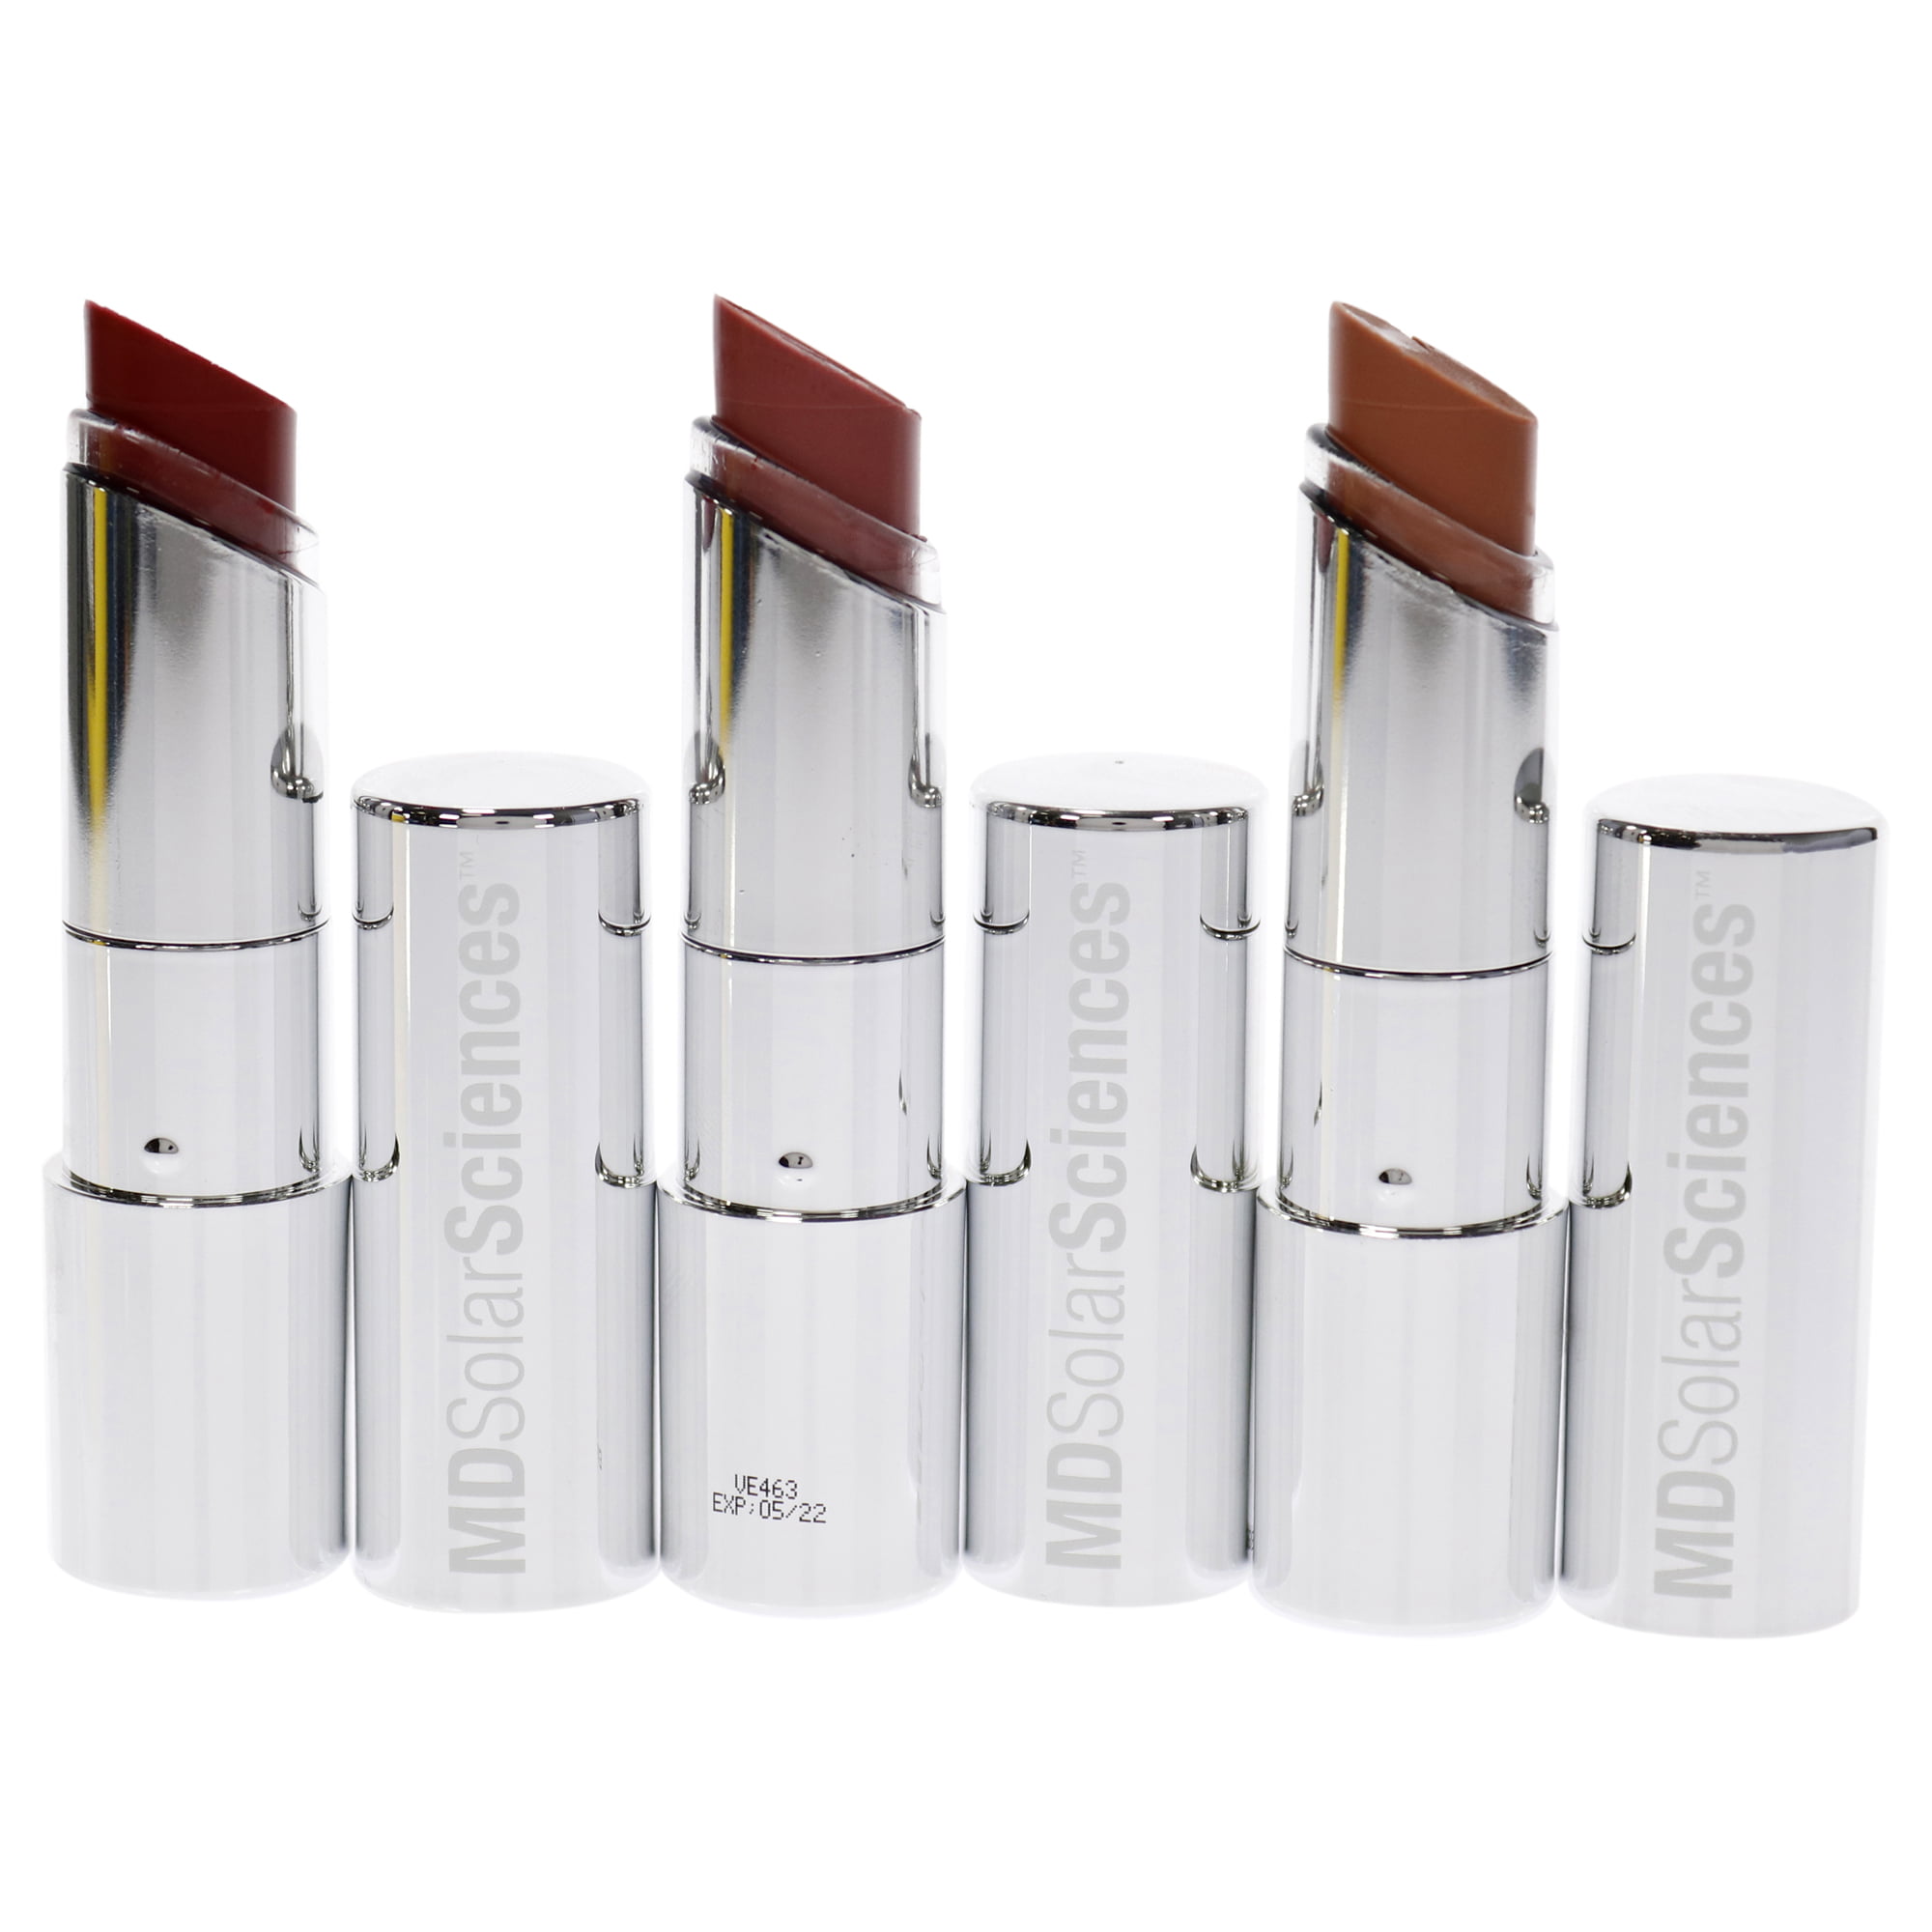  MDSolarSciences Tinted Lip Balm SPF 30 – Sheer